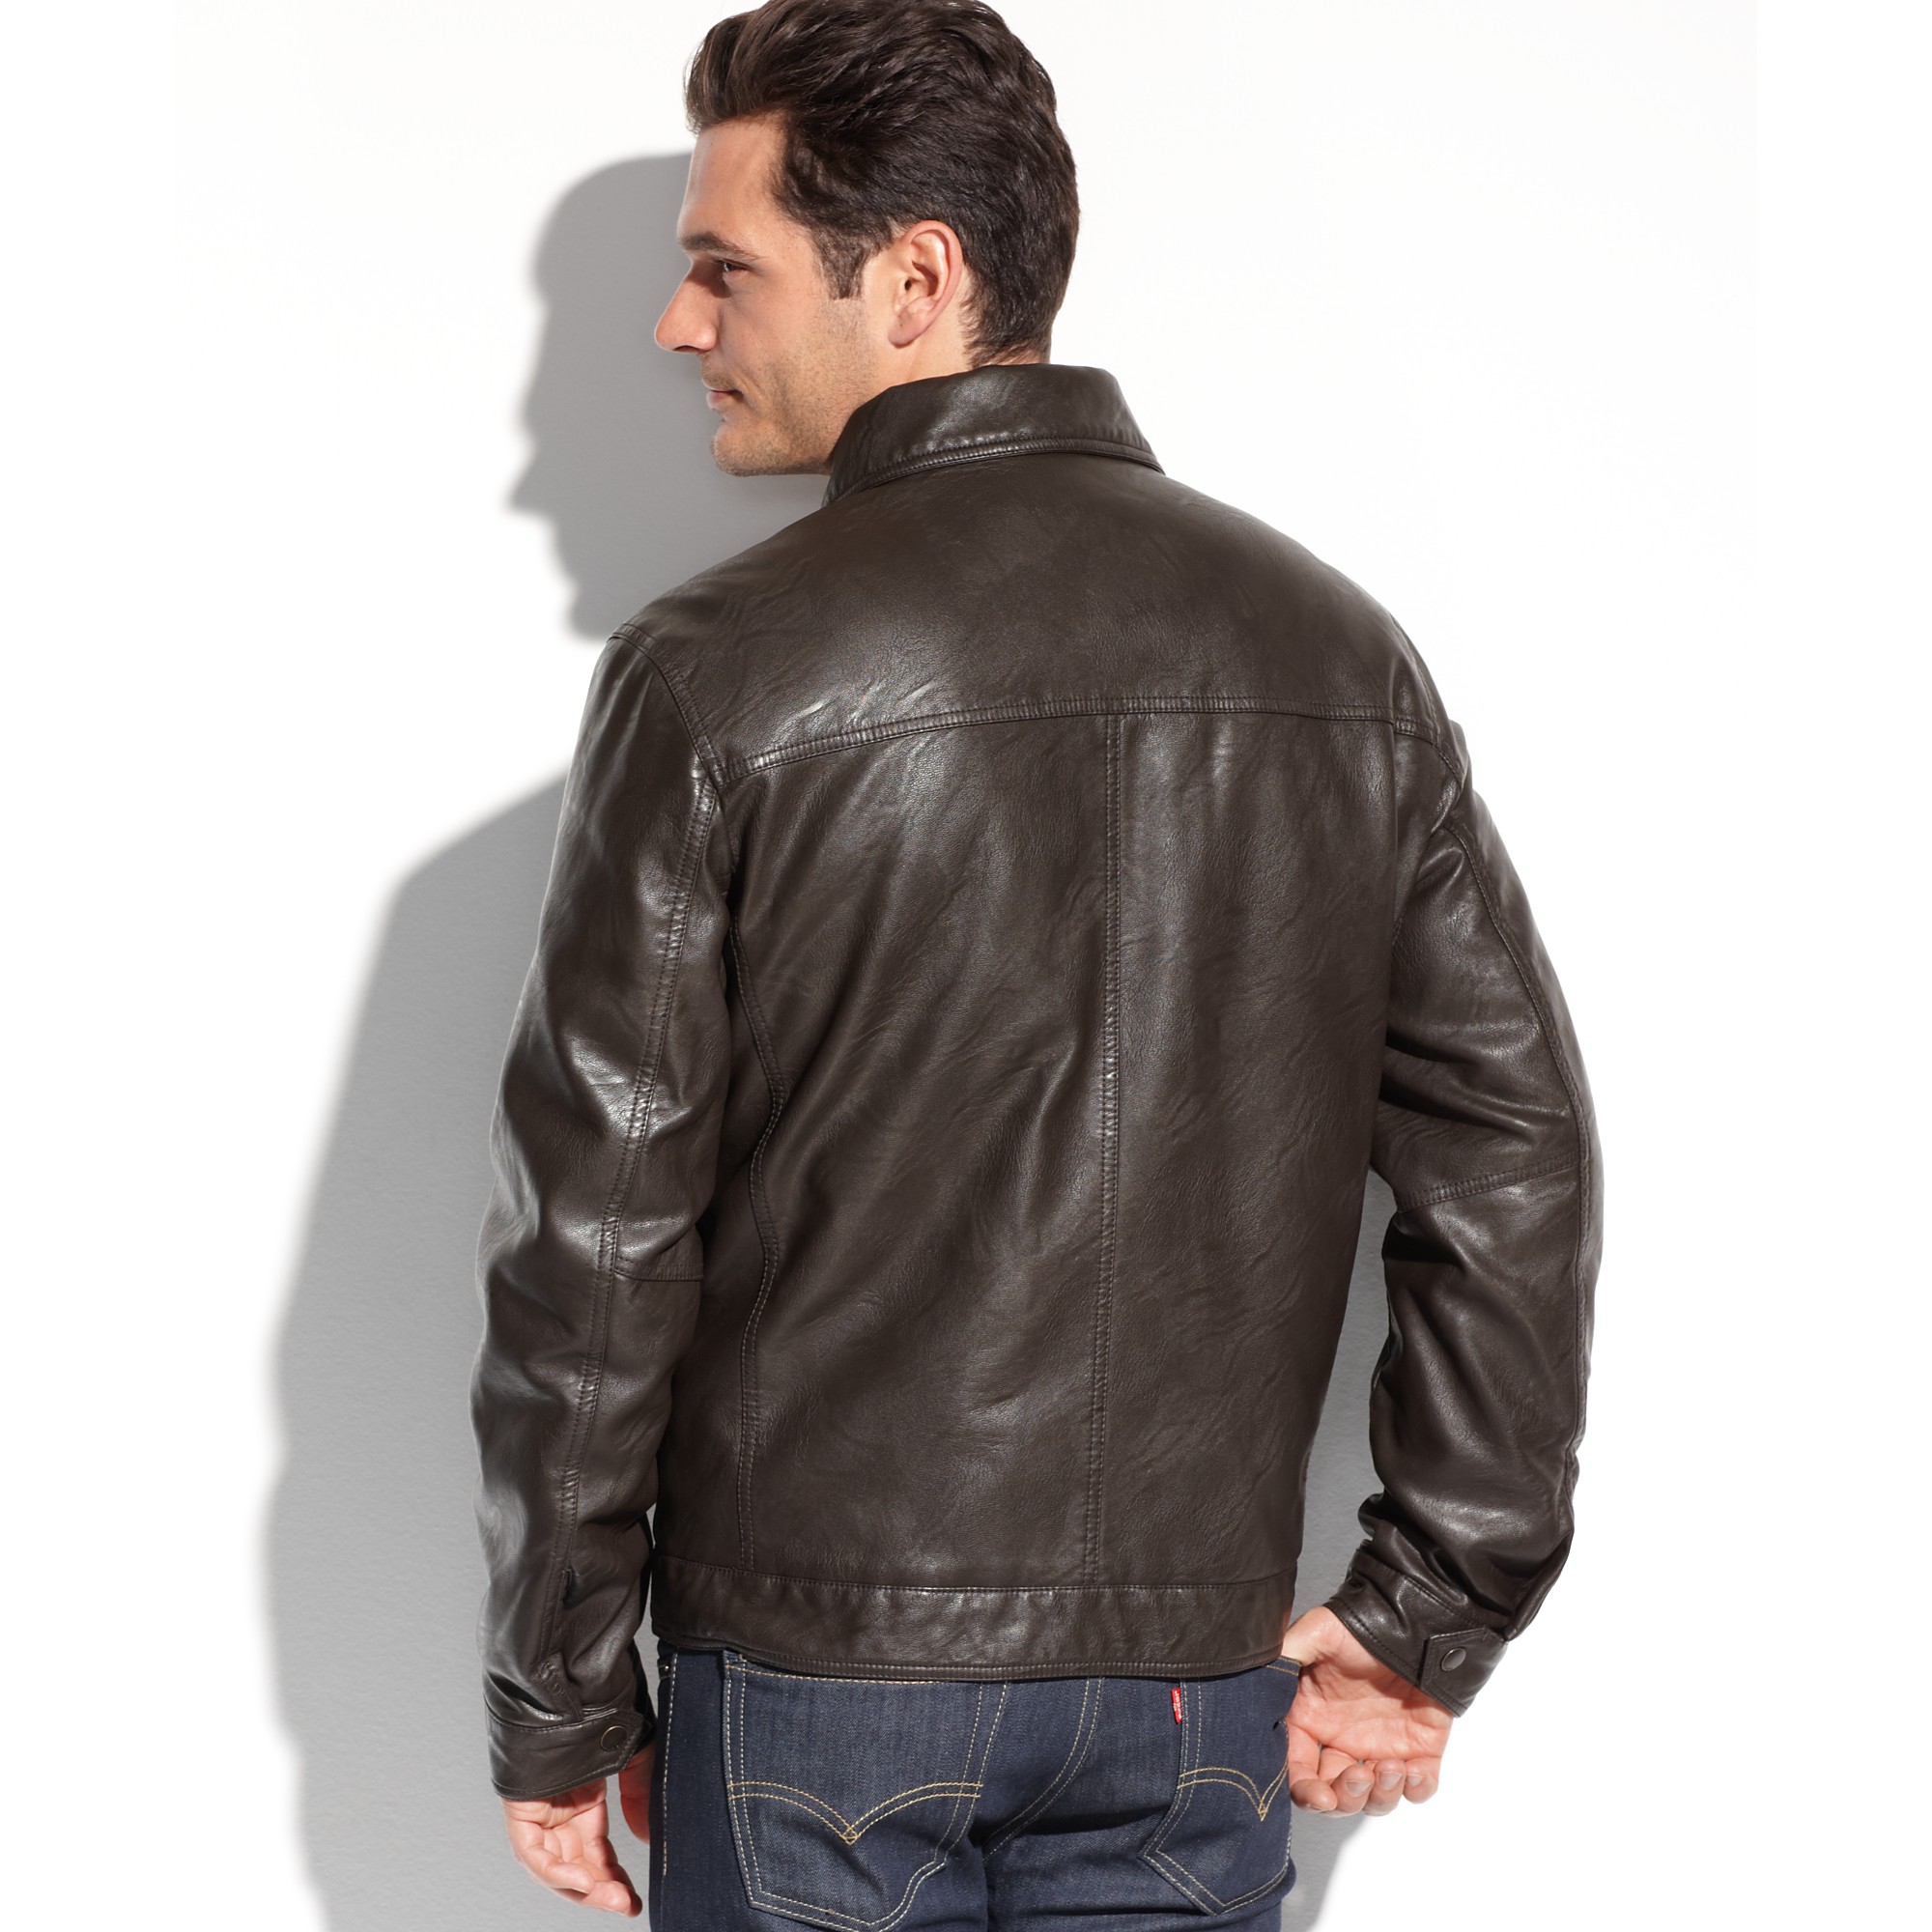 tommy hilfiger faux leather bomber jacket